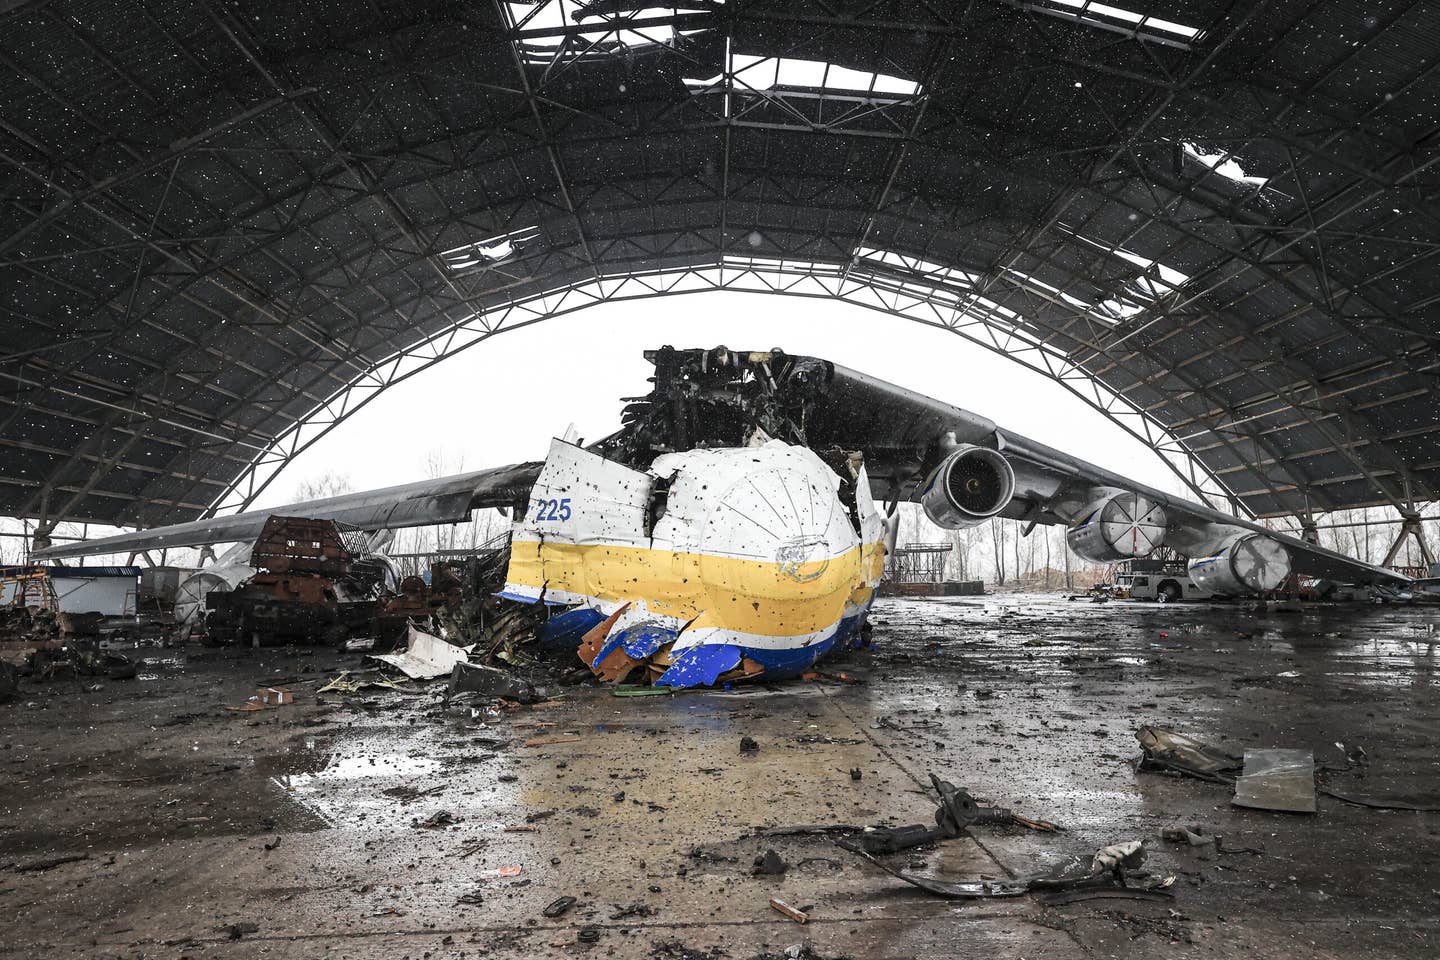 The Shaman battalion member named "Sydney" said Russia destroyed the An-225 cargo jet known as Mriya. <em>Metin Aktas/Anadolu Agency via Getty Images</em>